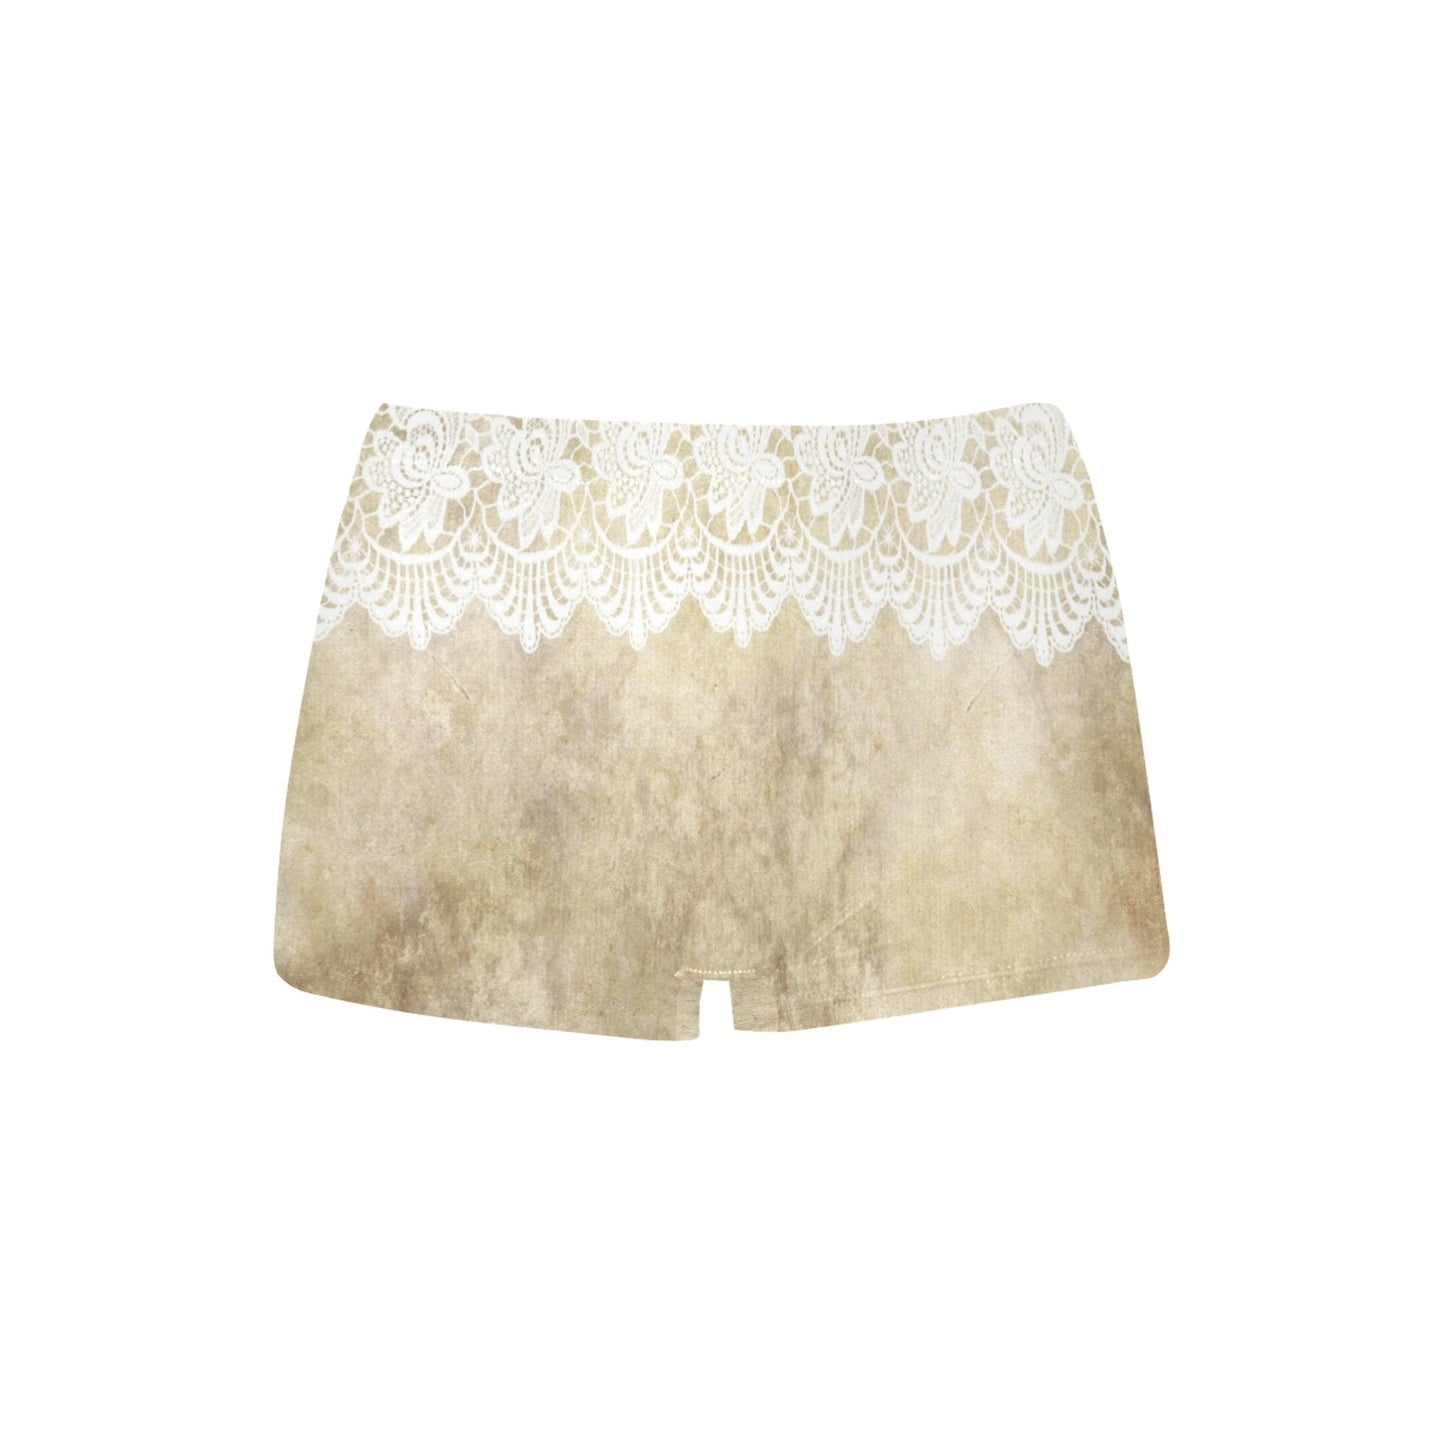 Printed Lace Boyshorts, daisy dukes, pum pum shorts, shortie shorts , design 28